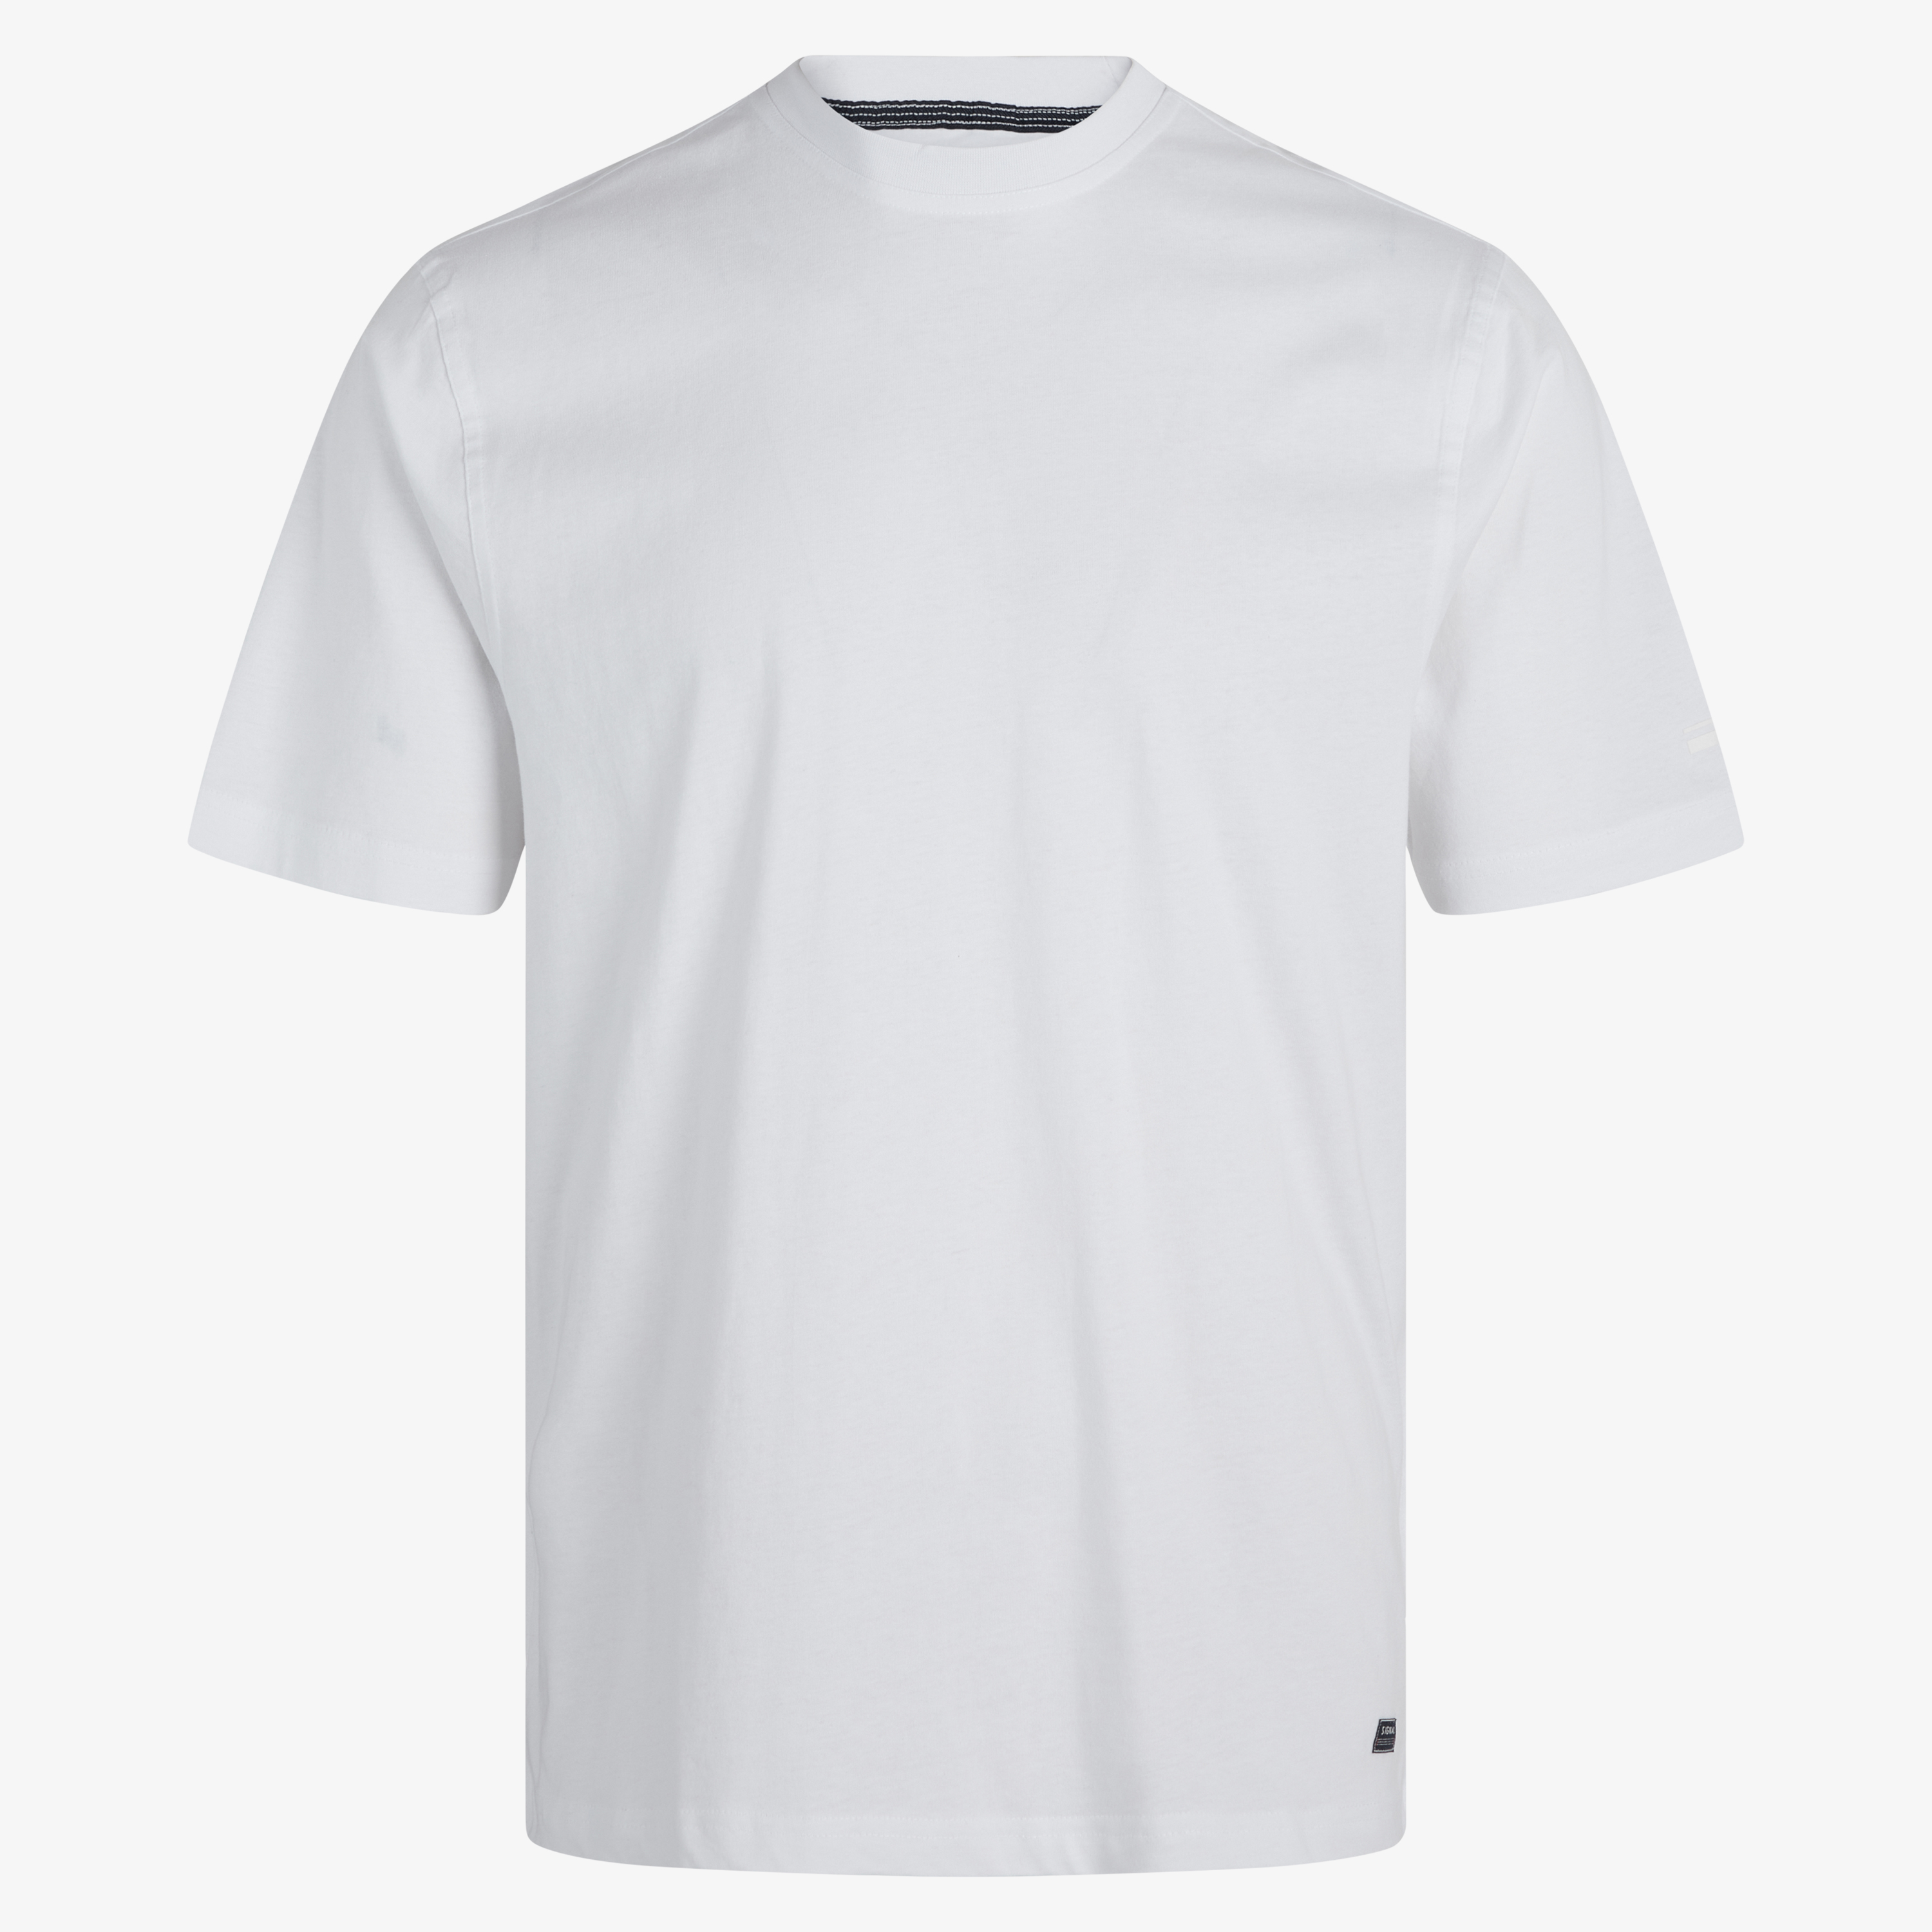  Eddy T-shirt, Hvid, XL